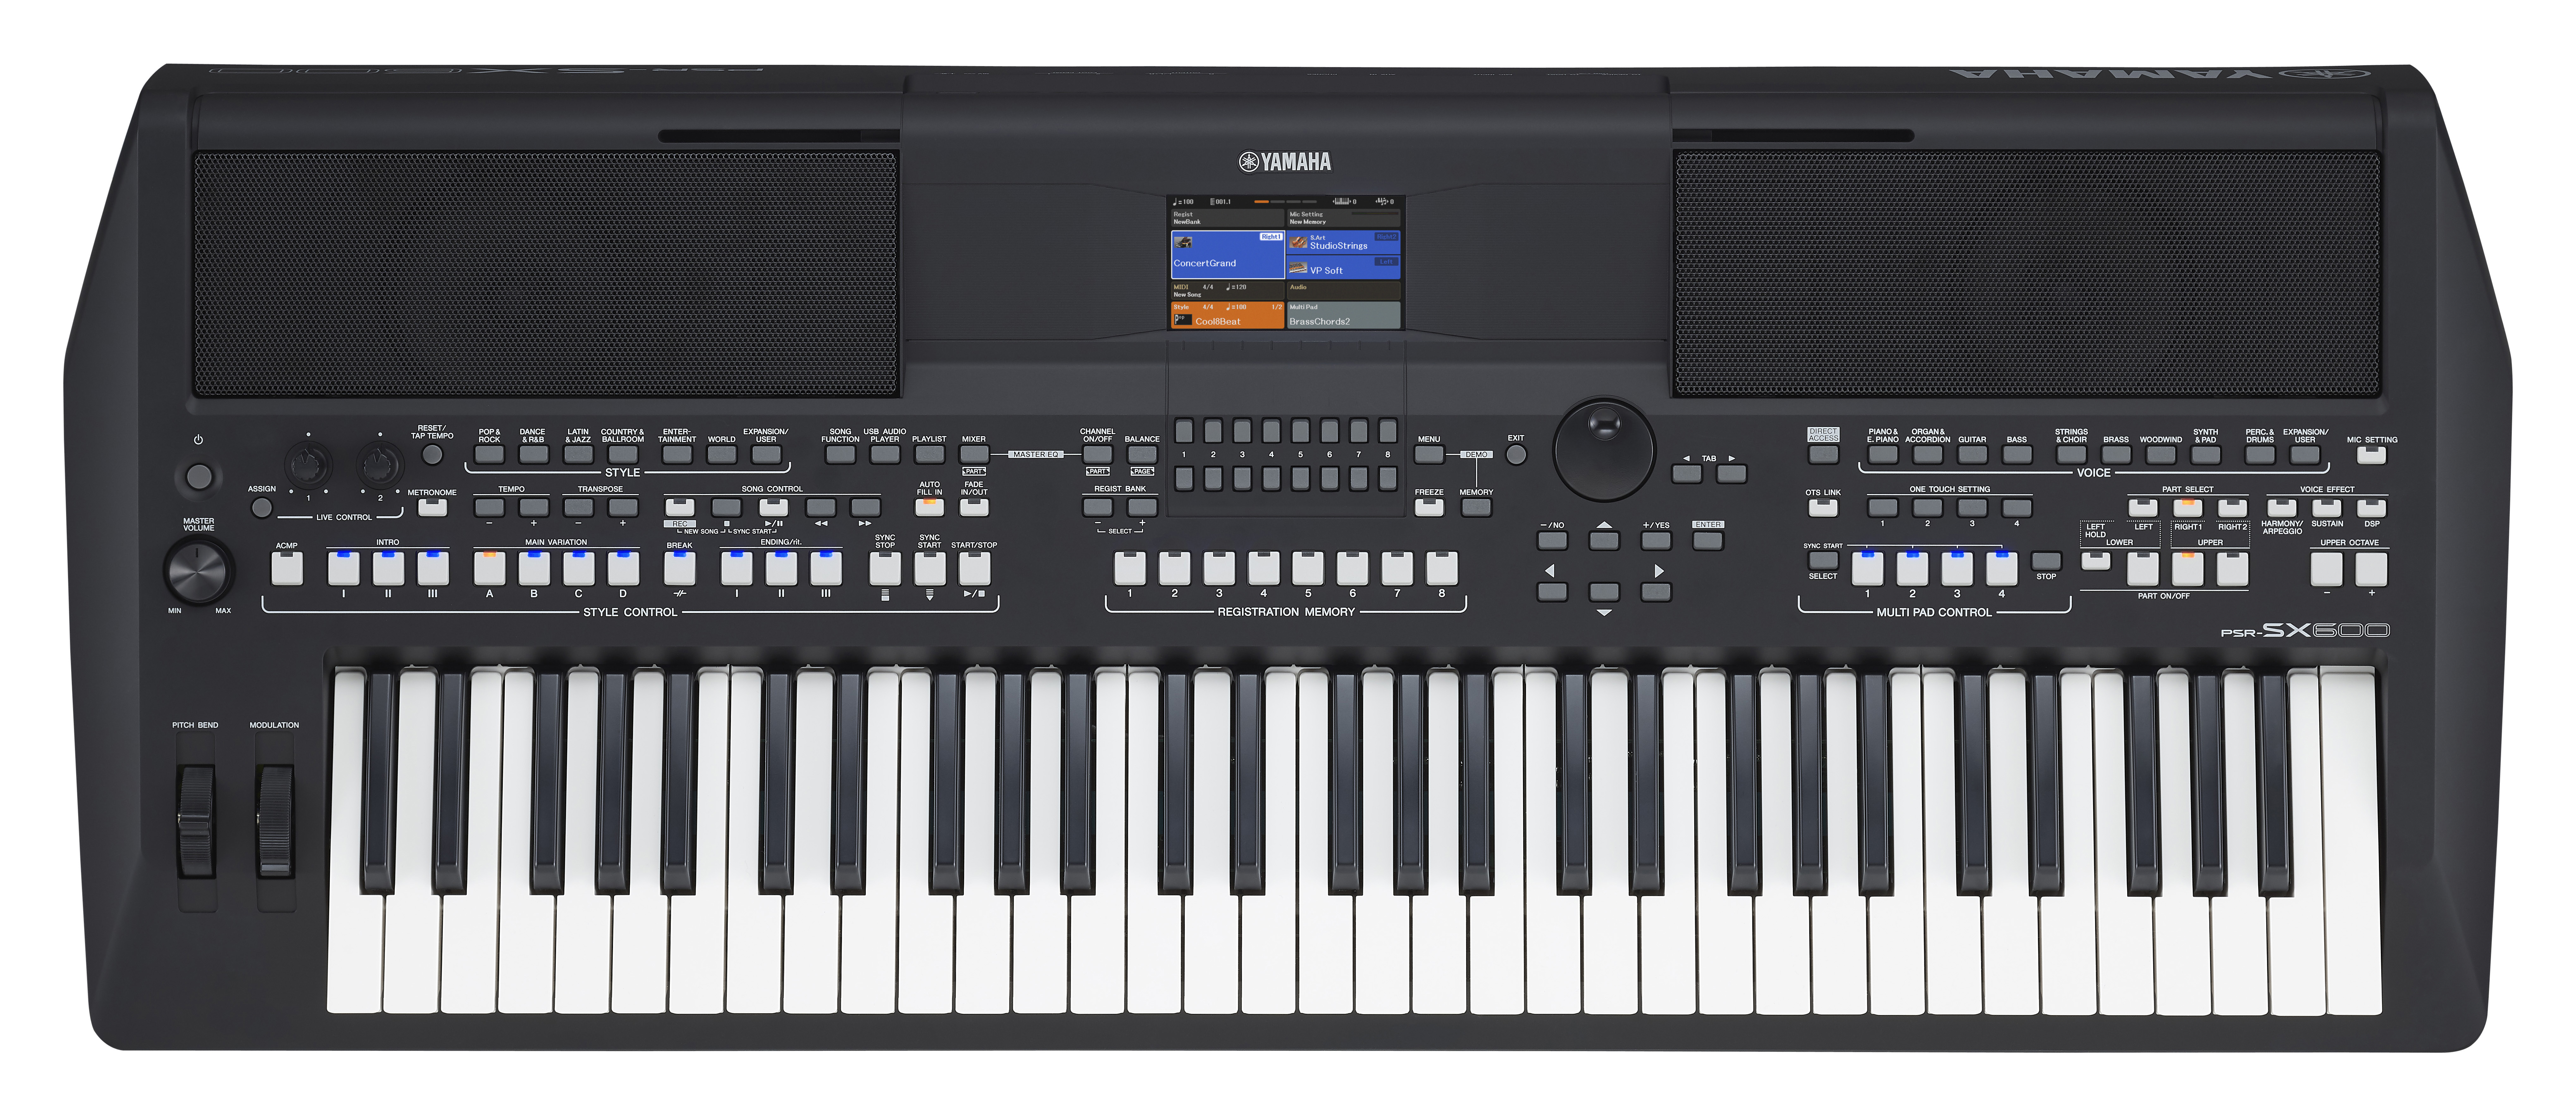 Yamaha Psr-sx600 - Entertainer Keyboard - Variation 6